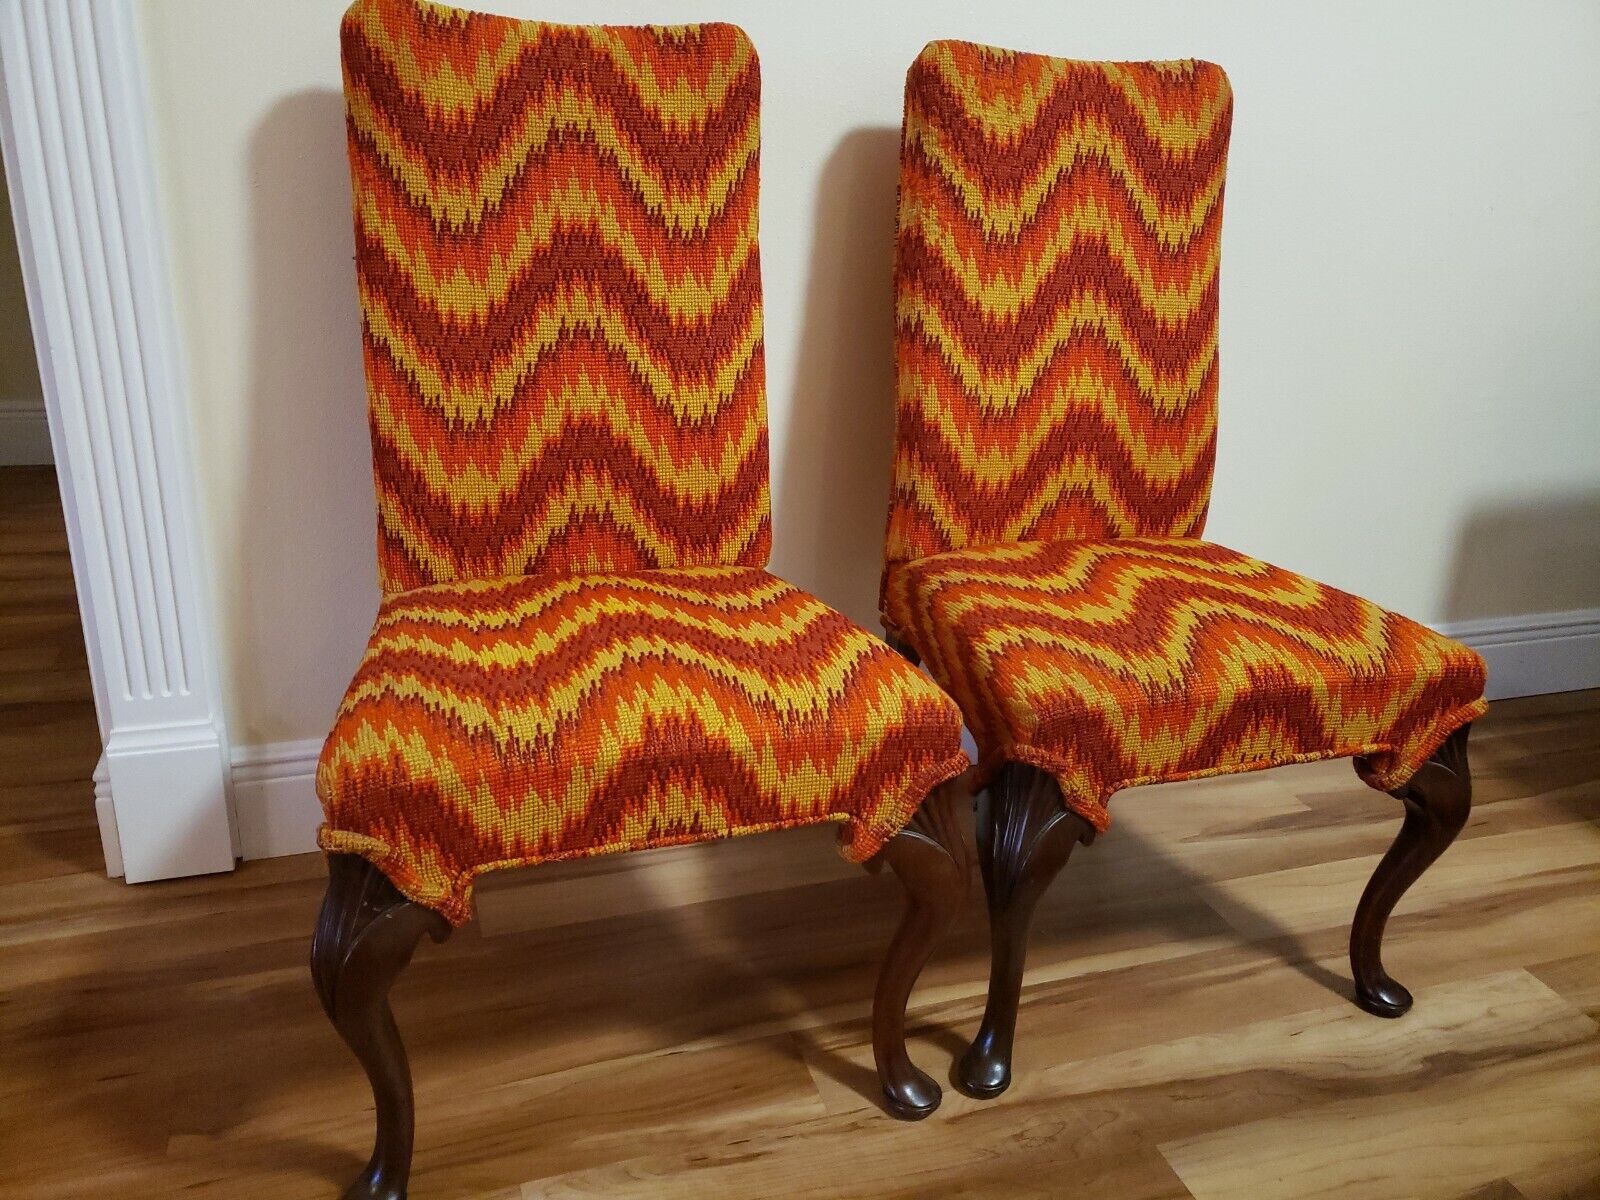 Hickory north Carolina flame stitch mcm Chairs ordered Dorothy Draper retro